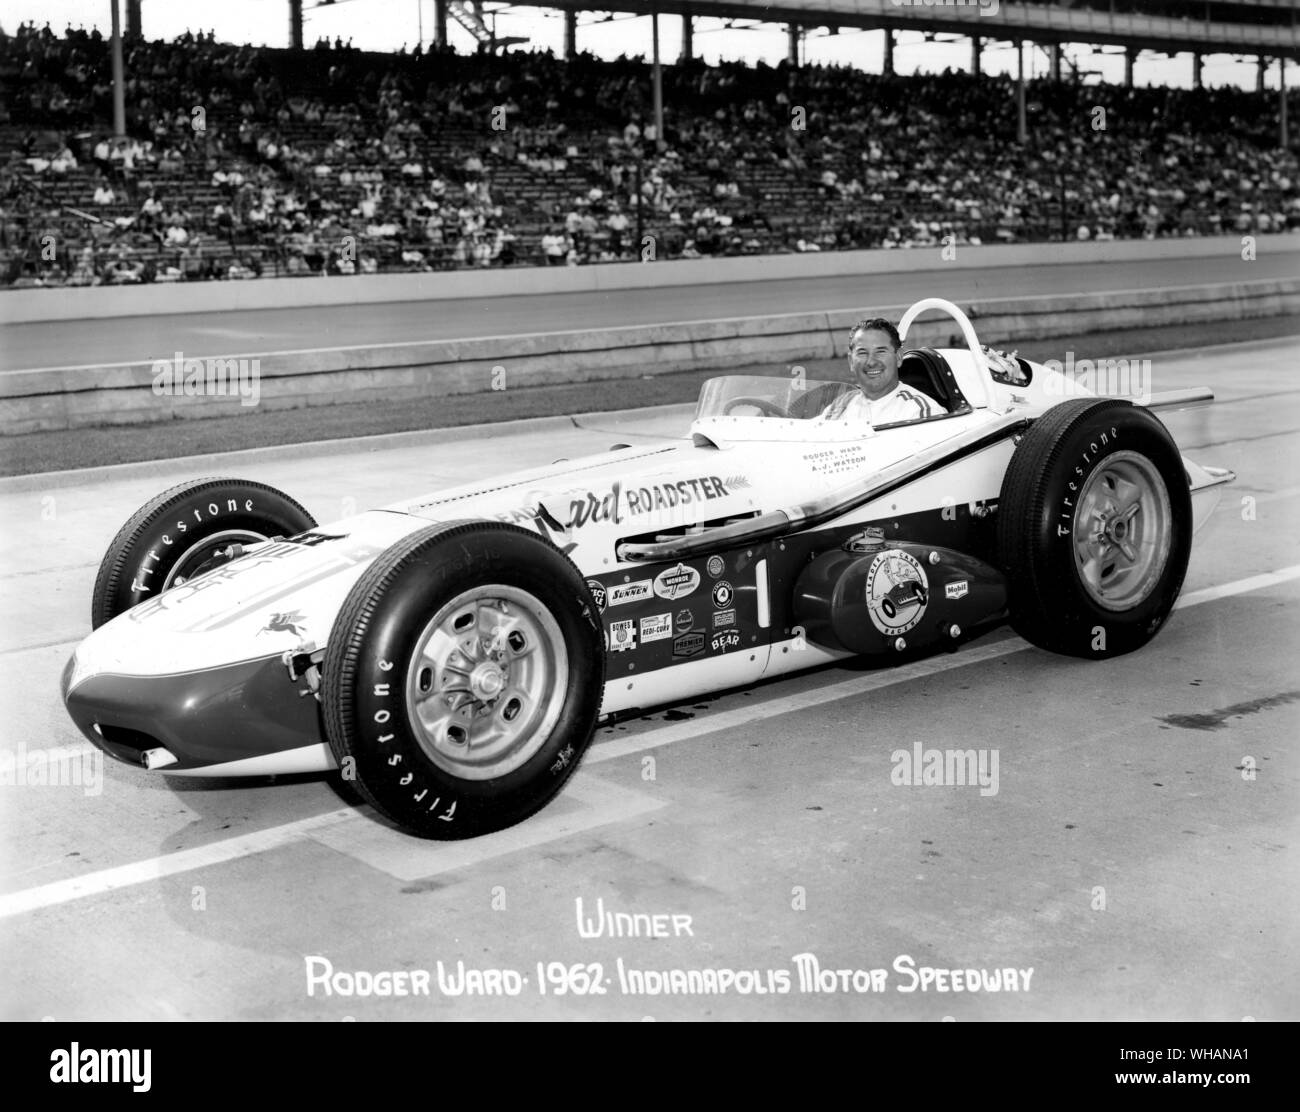 Roger Ward 1962 . Indianapolis Motor Speedway Stock Photo